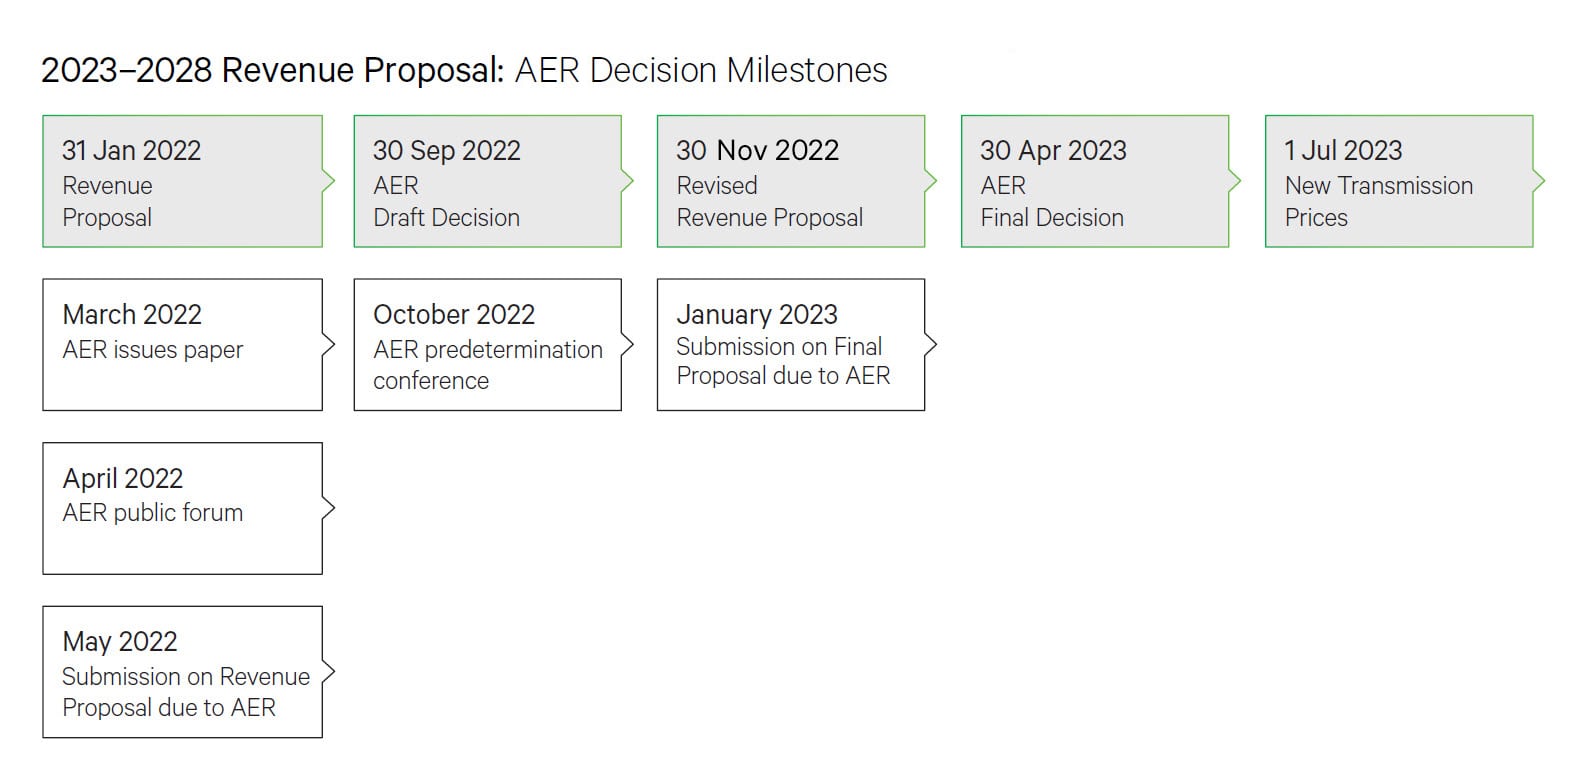 Transgrid 2023-2028 Revenue Proposal